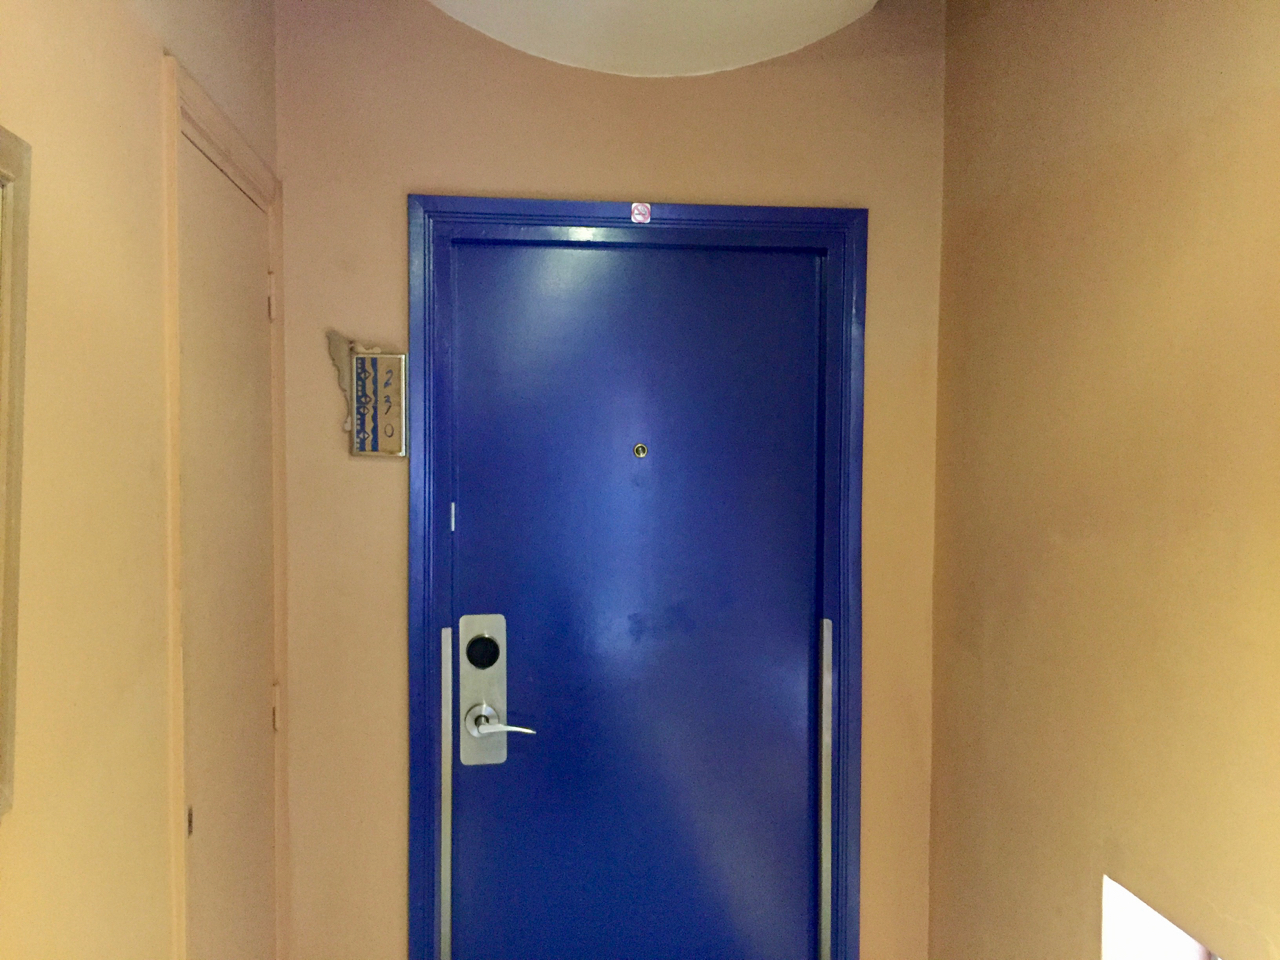 a blue door in a hallway